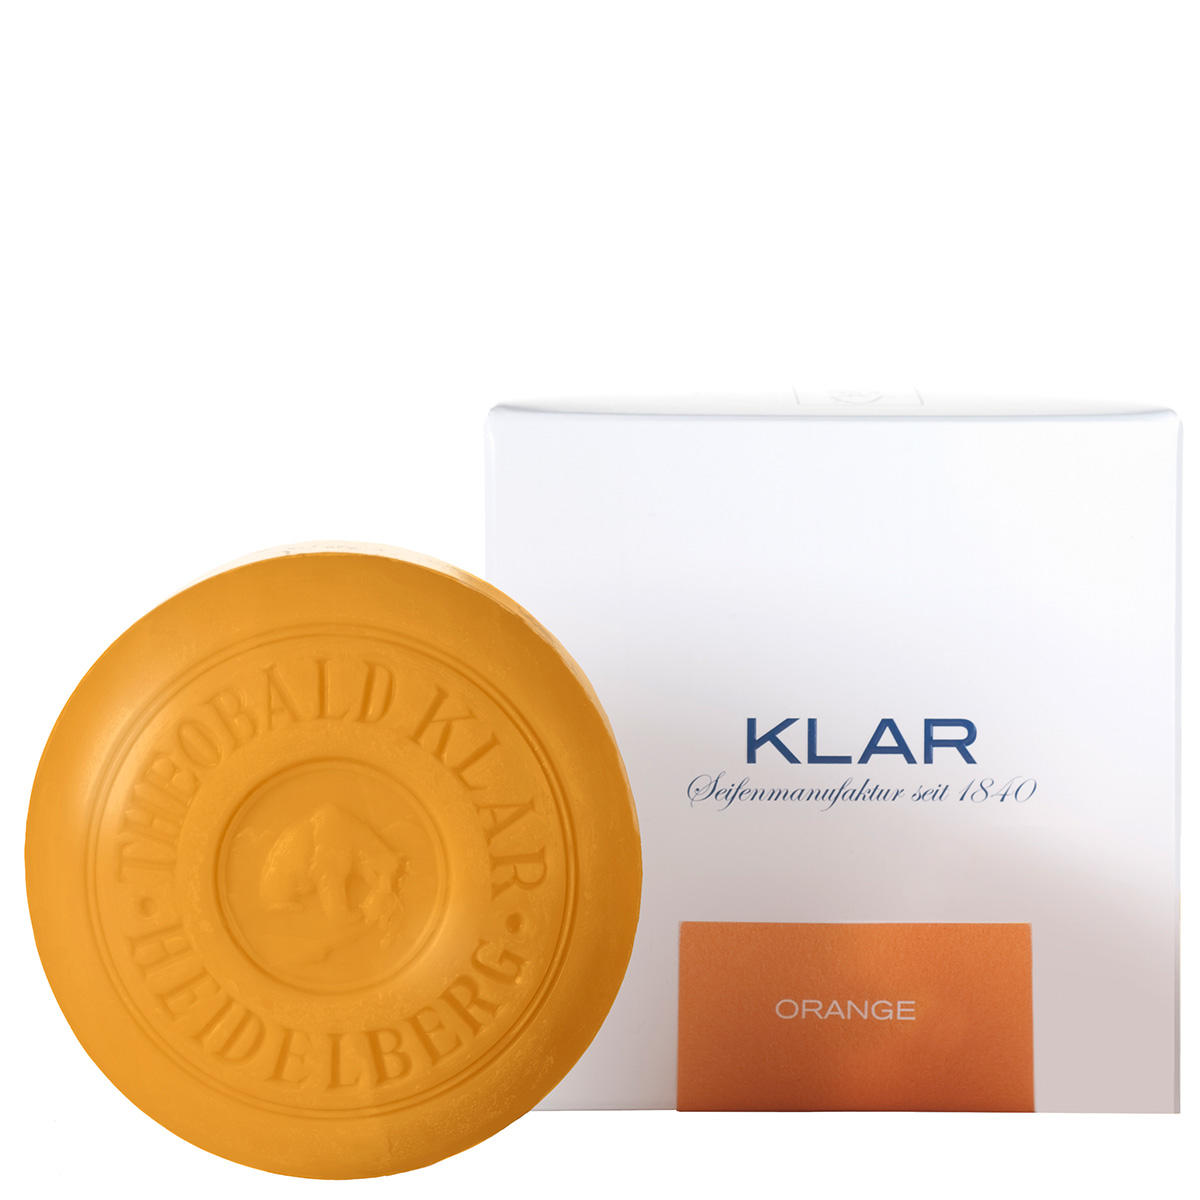 KLAR Orangen Seife 150 g - 1